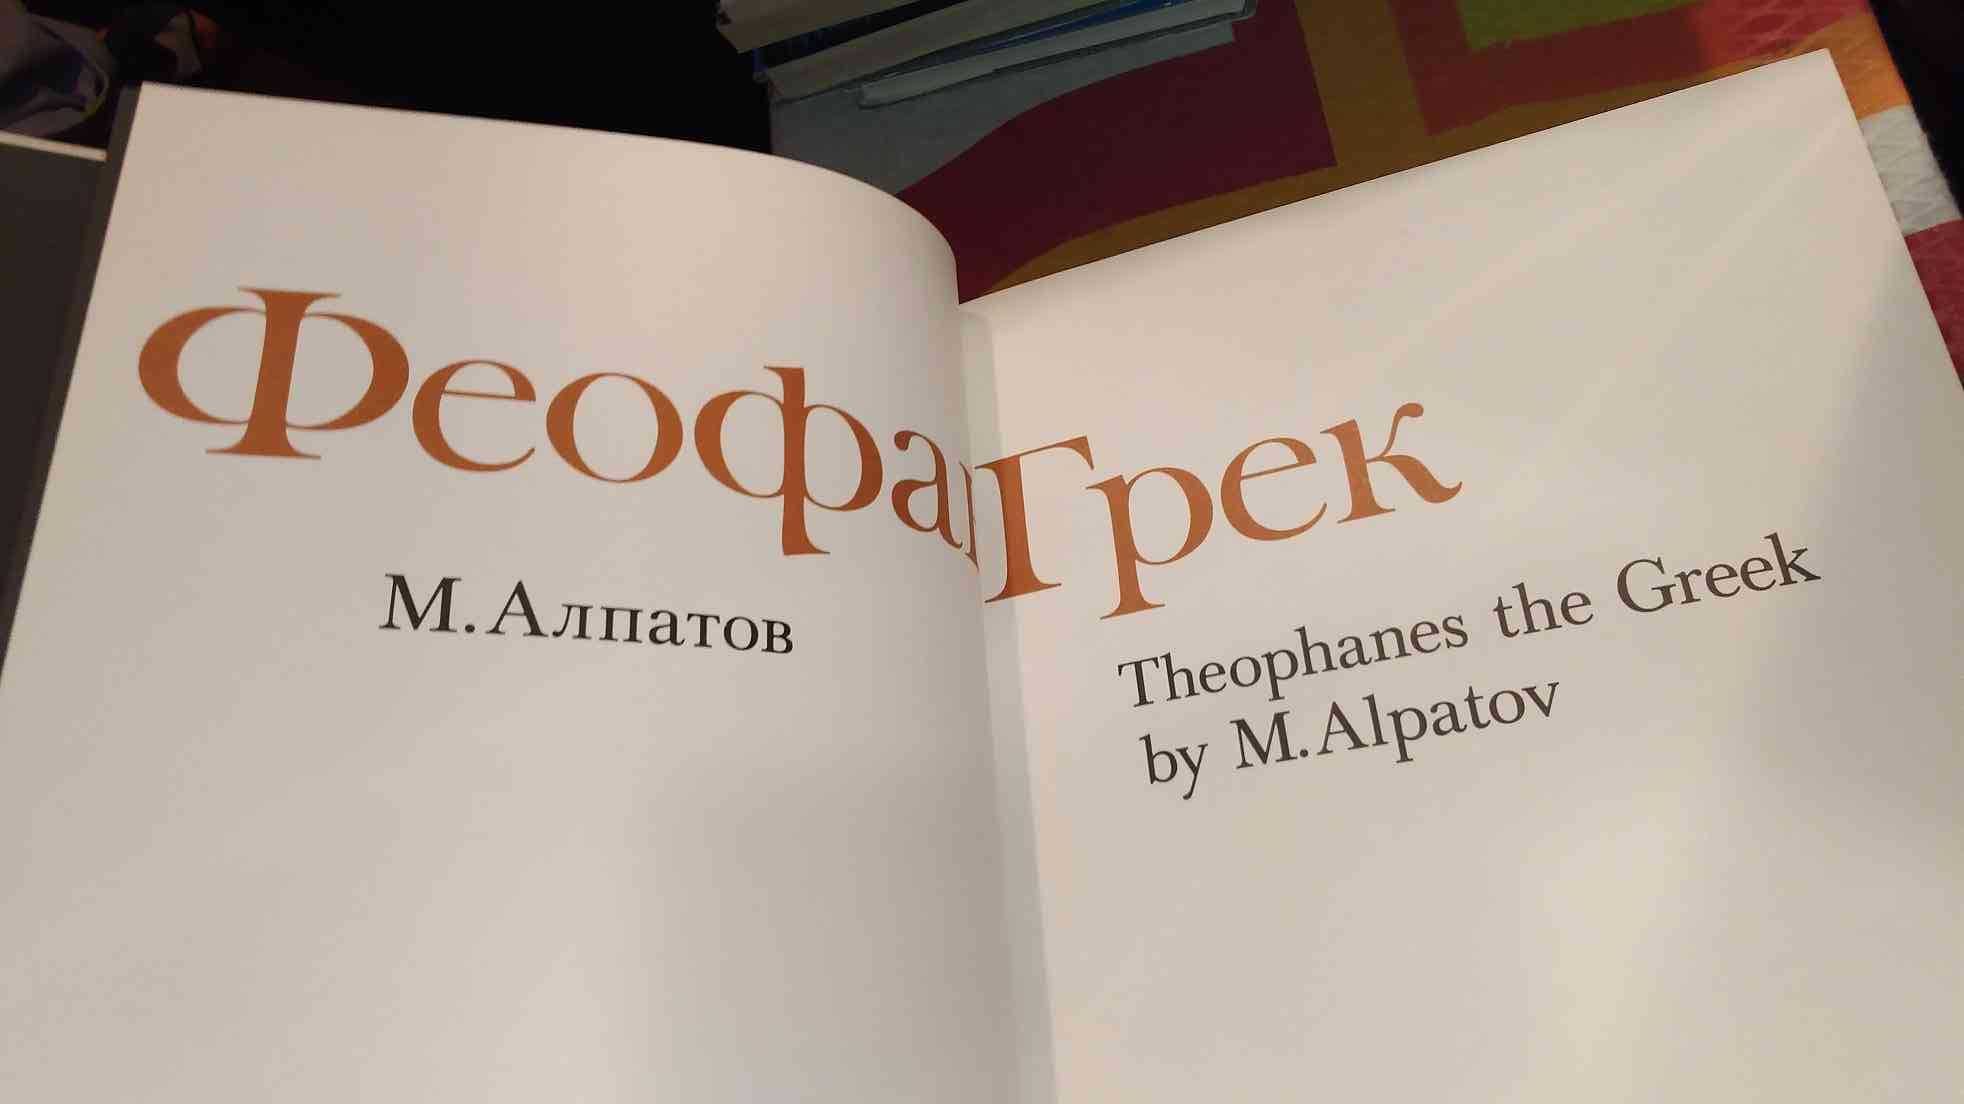 Феофагрек
М.алпатов
Theophanes The Greek By M. Alpatov